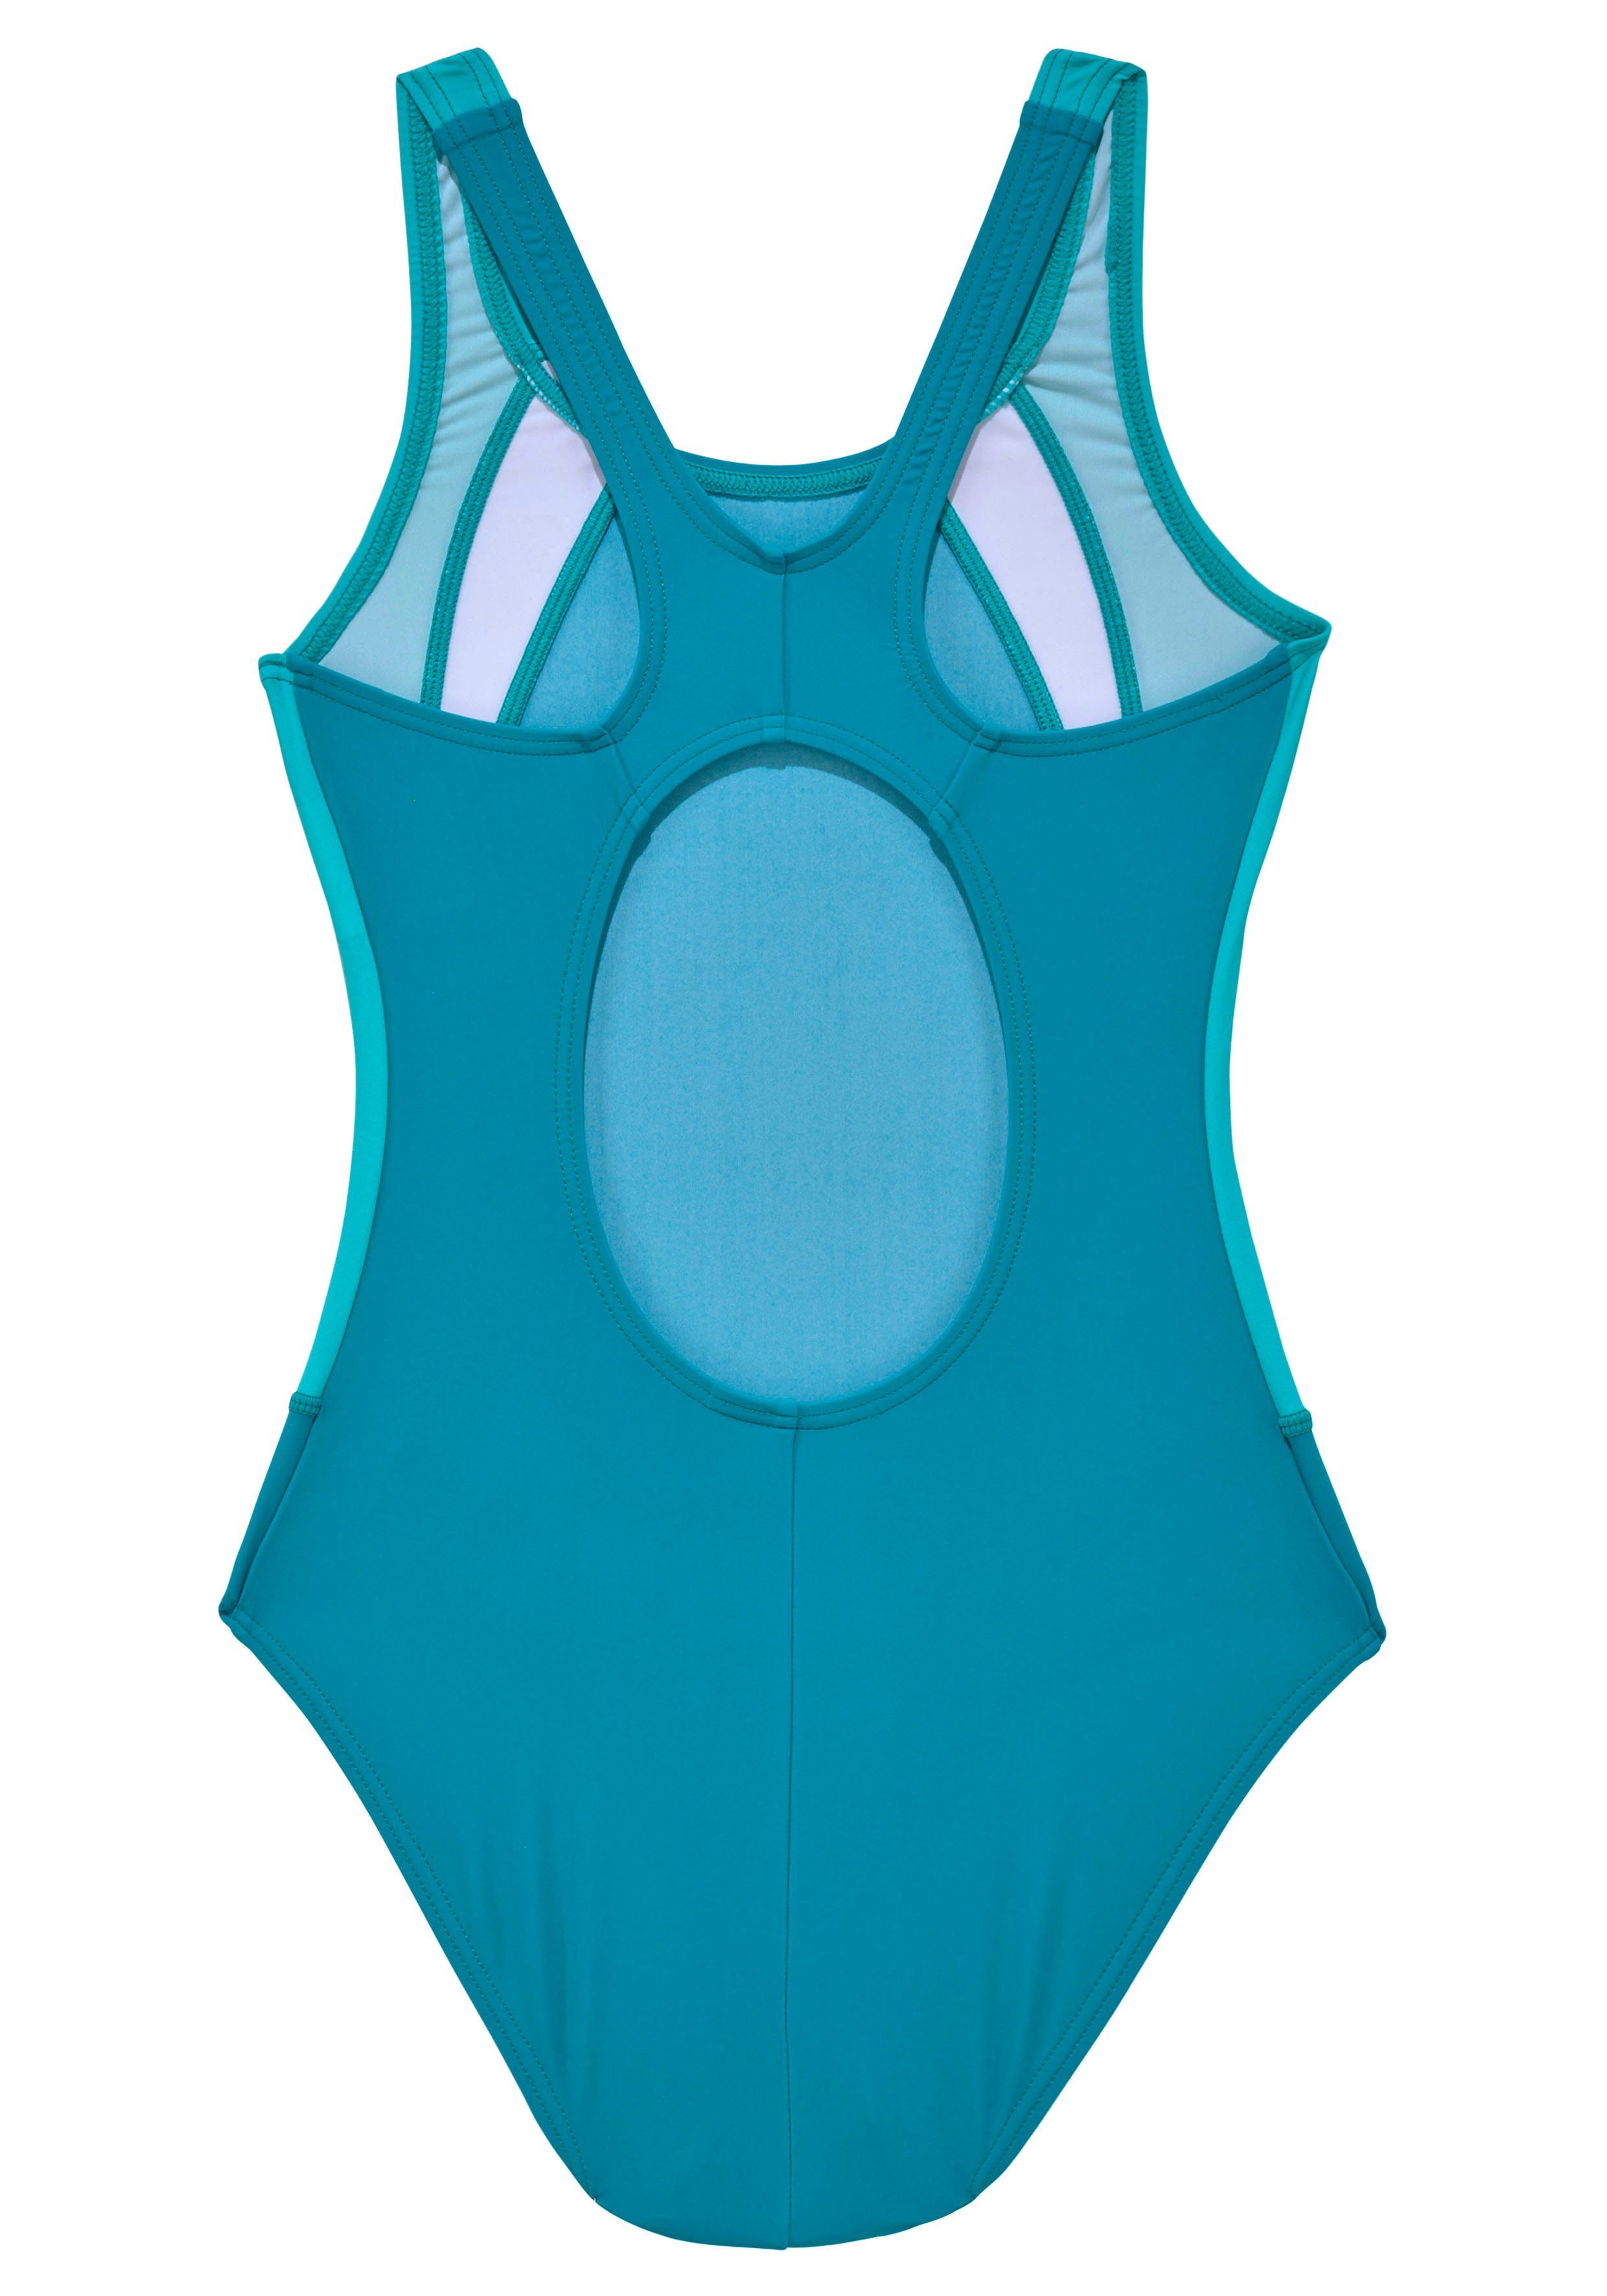 KangaROOS Badeanzug im Farbmix türkis-blau sportlichen